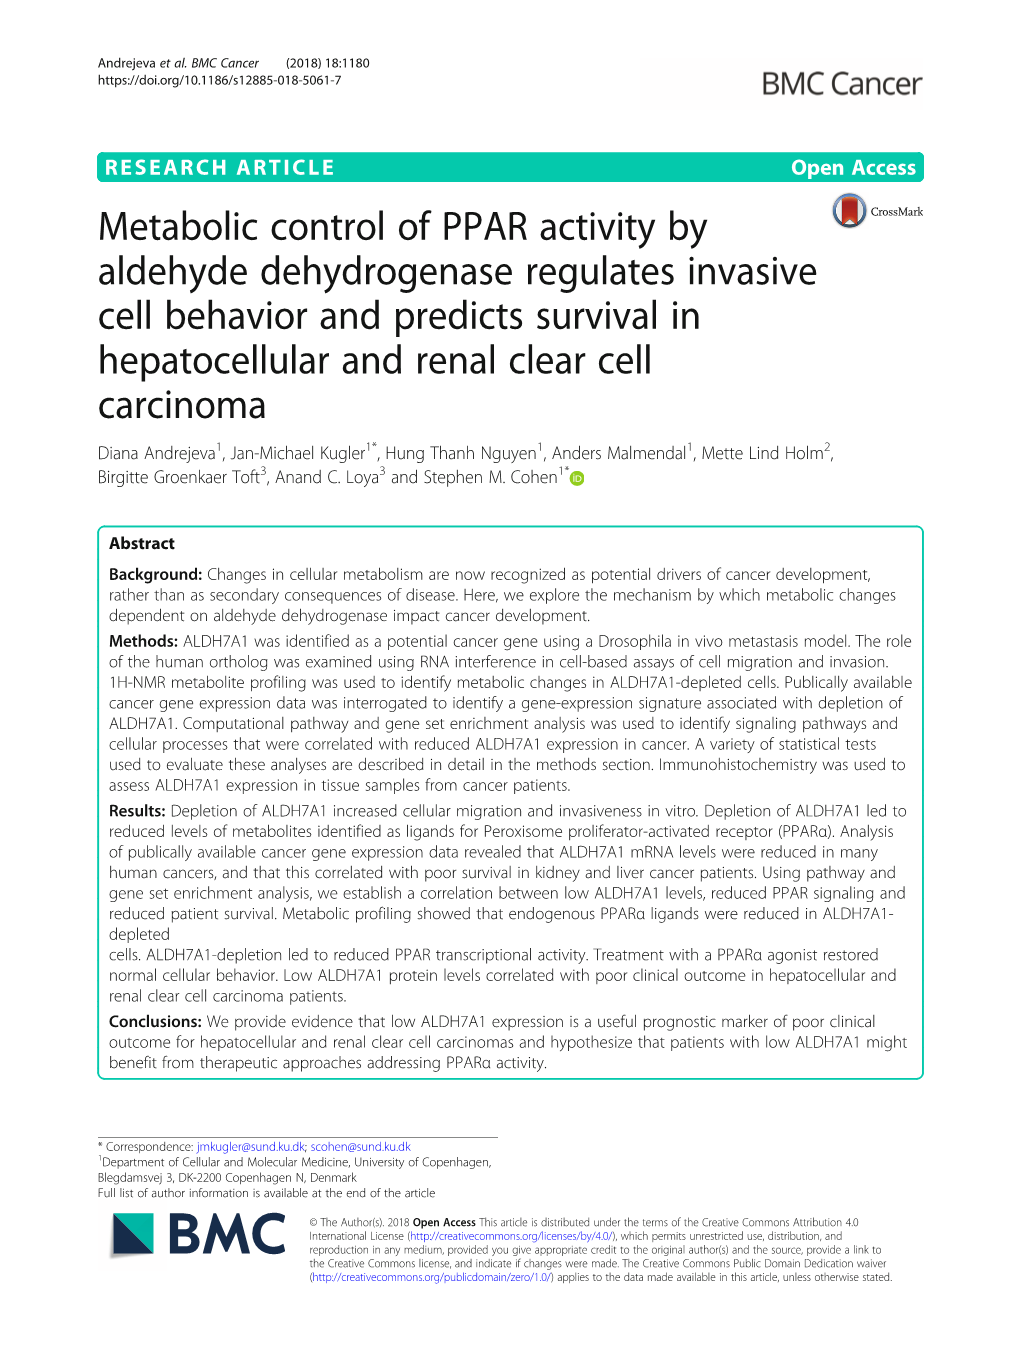 Metabolic Control of PPAR Activity by Aldehyde Dehydrogenase Regulates Invasive Cell Behavior and Predicts Survival in Hepatocel